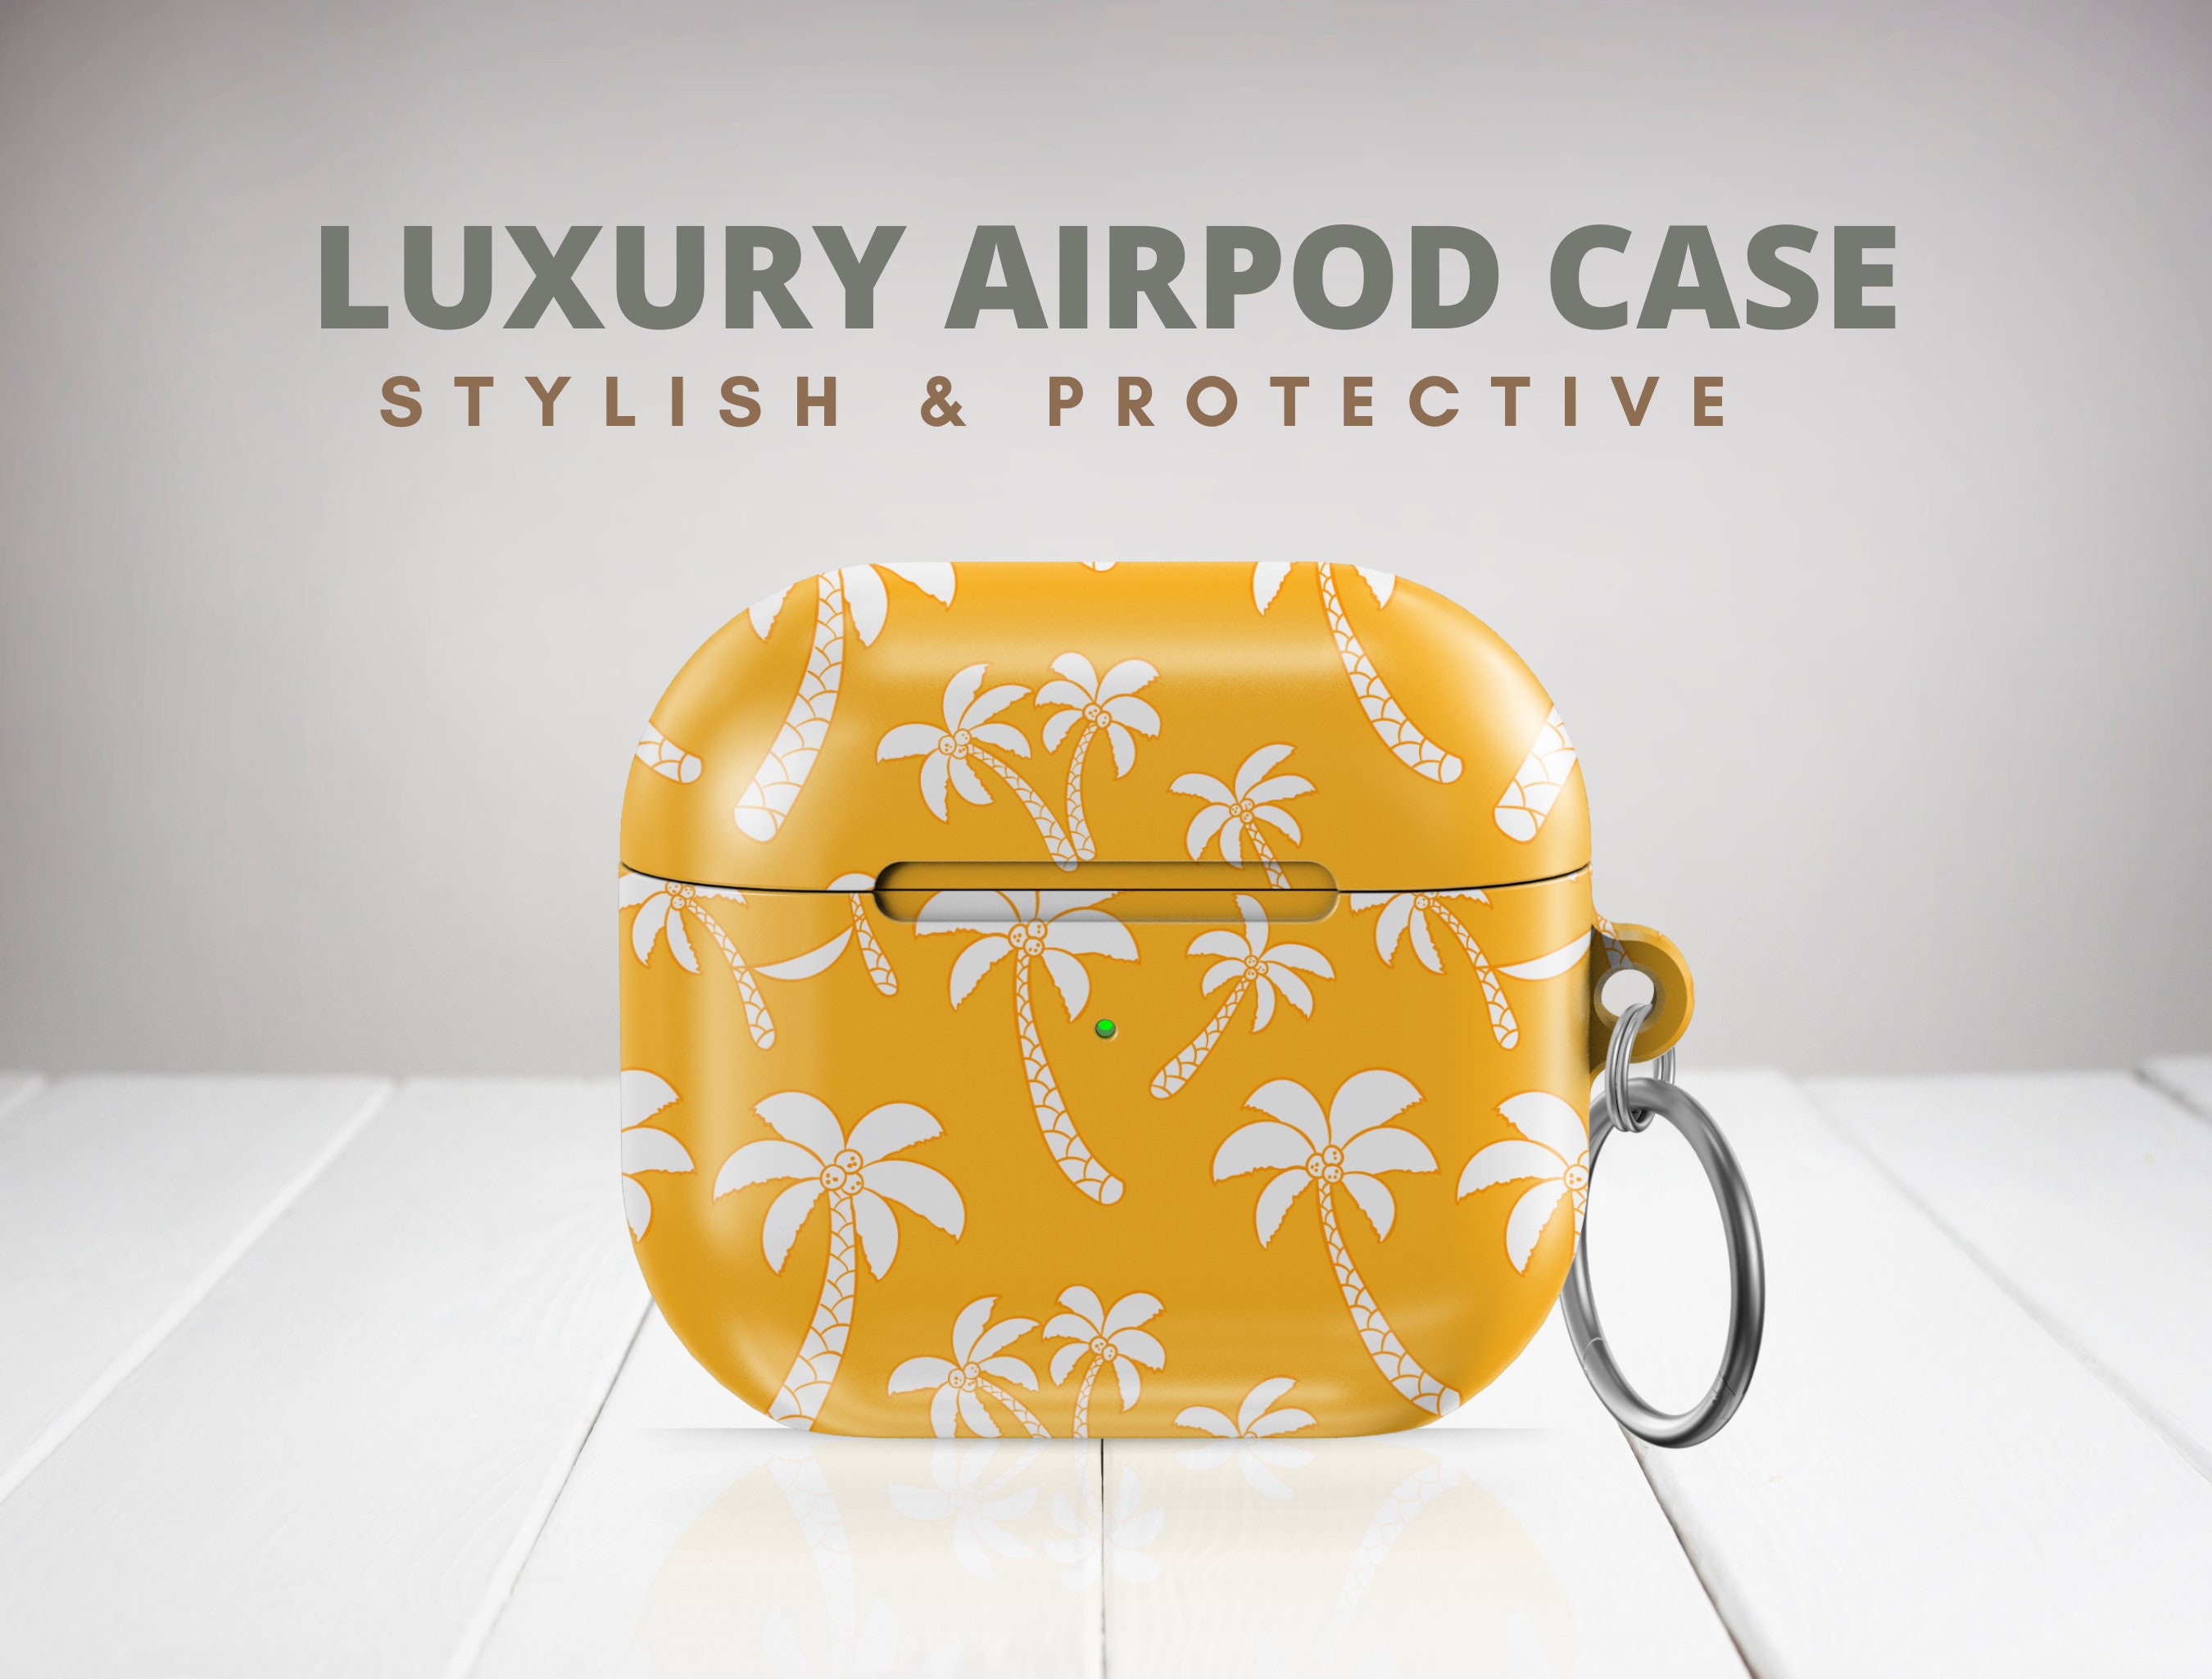 Lux airpod case